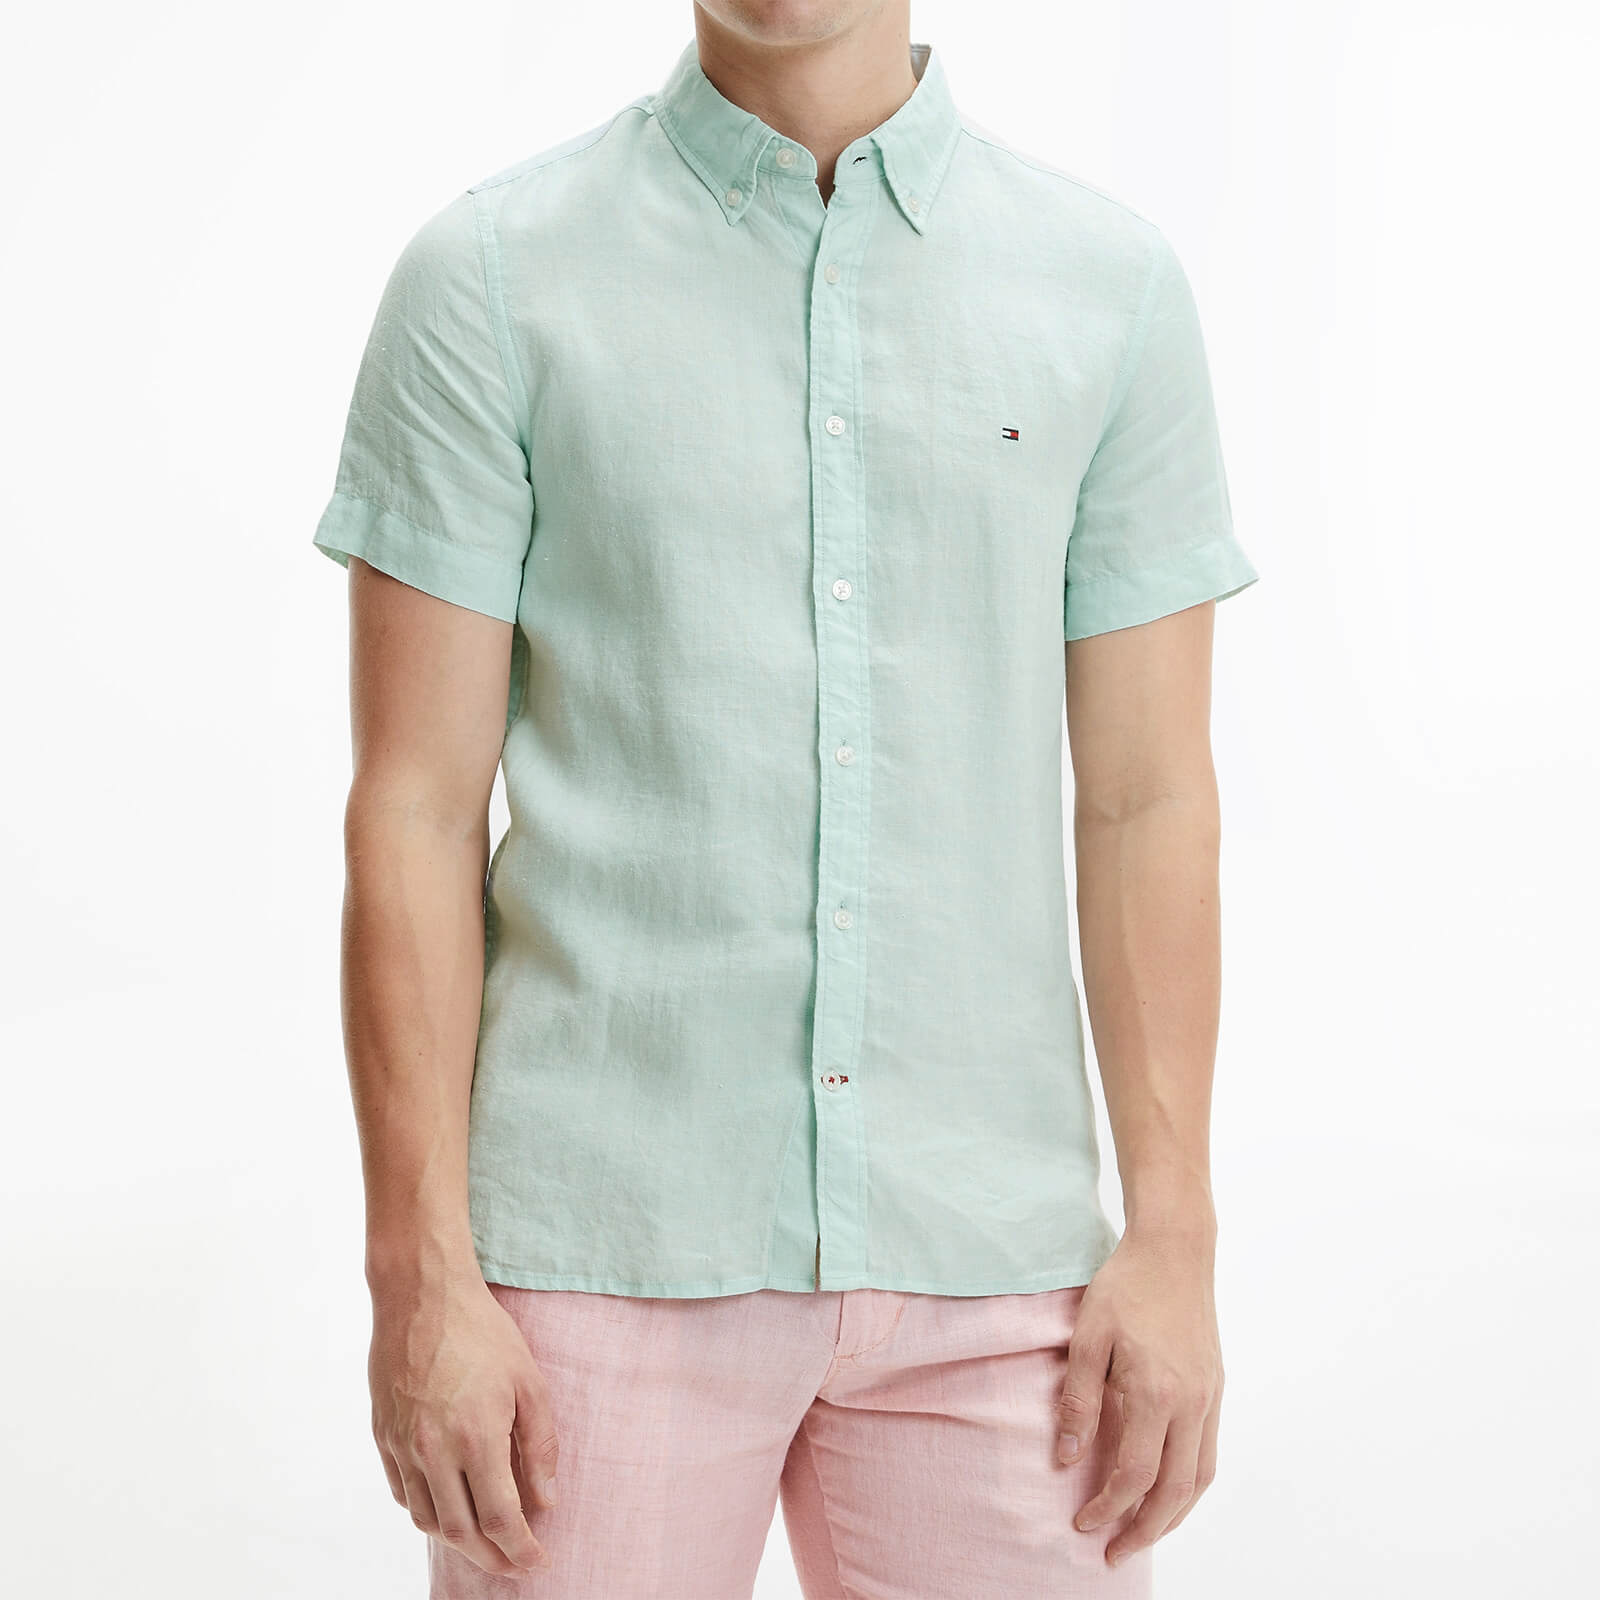 Tommy Hilfiger Men's Pigment Dyed Li Sf Shirt S/S - Ligh Green - S